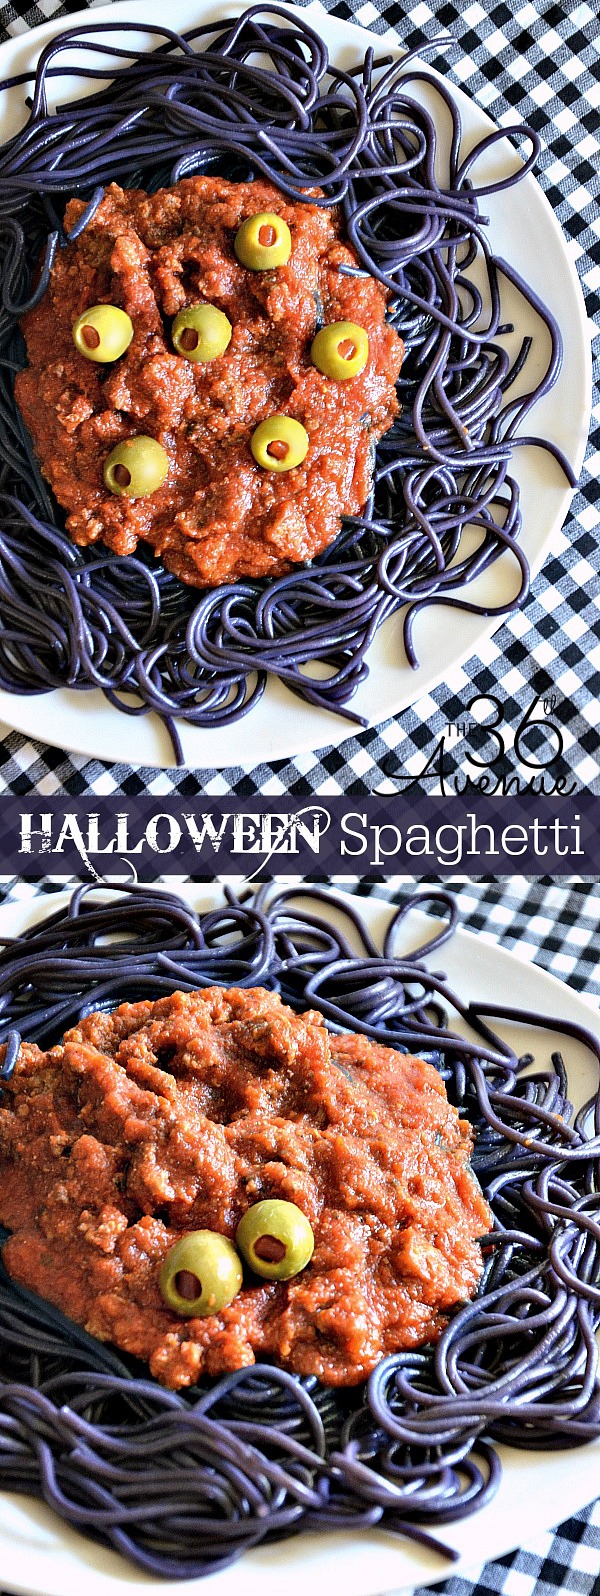 Halloween Spaghetti Recipe at The 36th Avenue